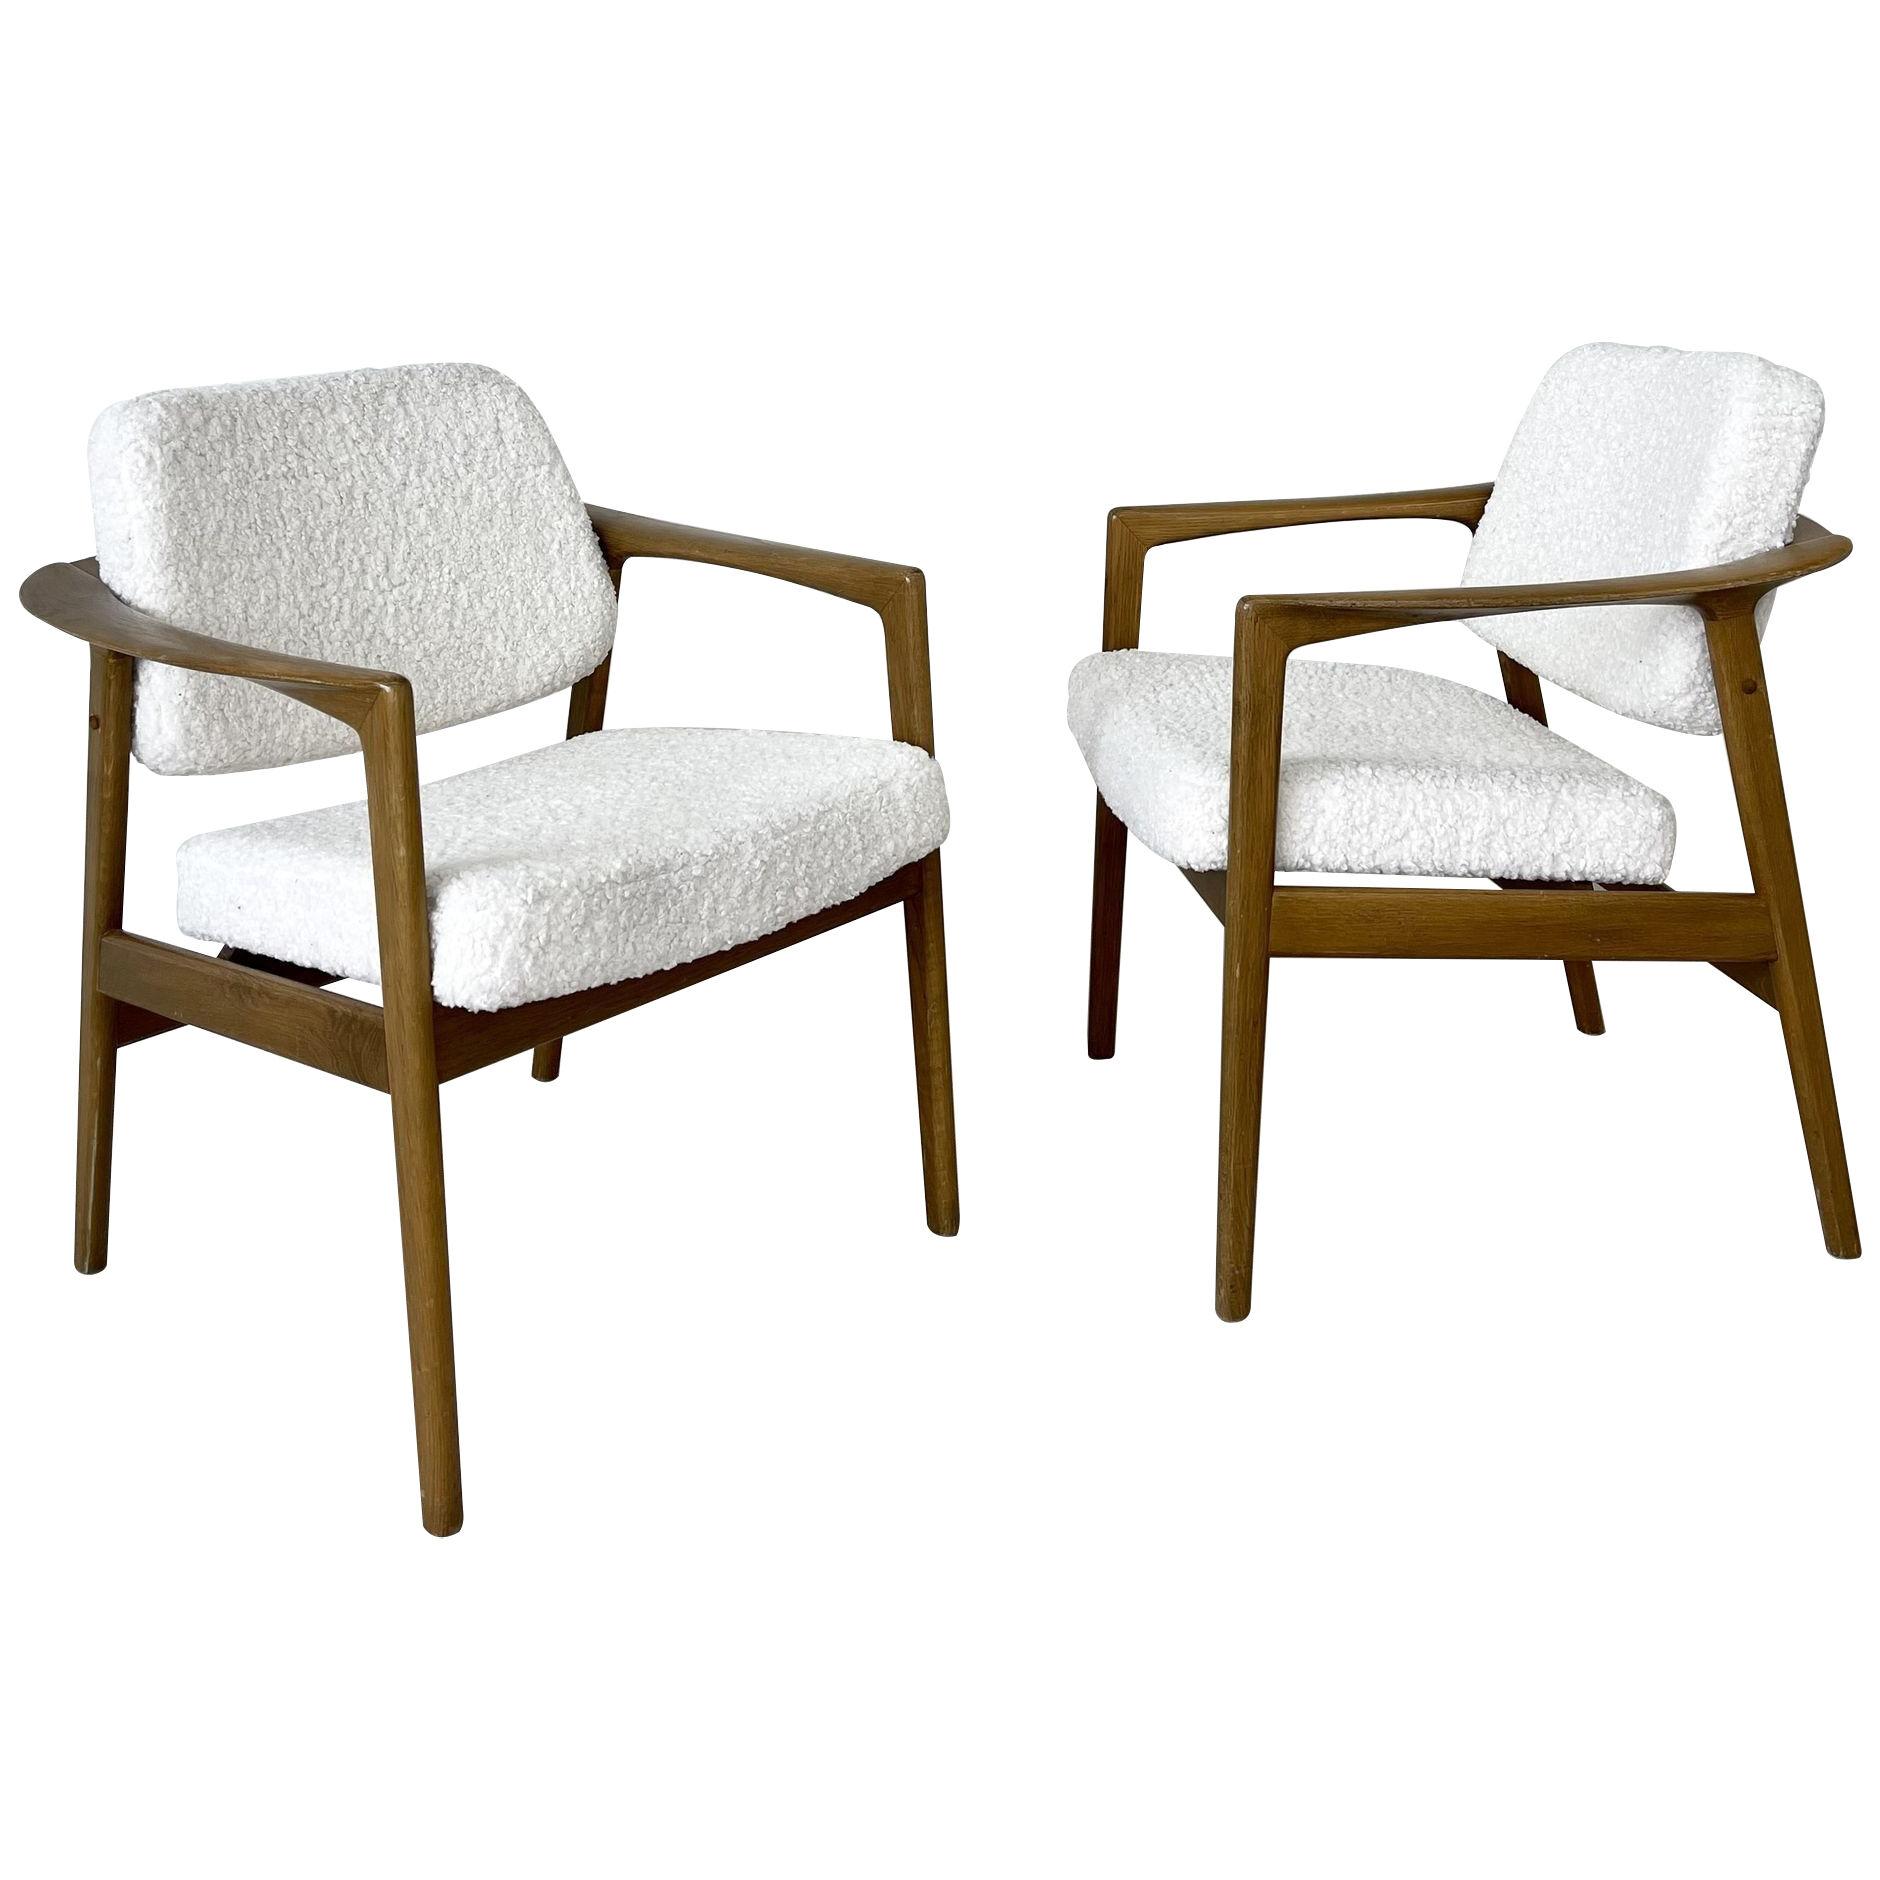 Pair of Mid-Century Modern Arm / Lounge Chairs, Oak, Sheepskin, Sweden, 1970s